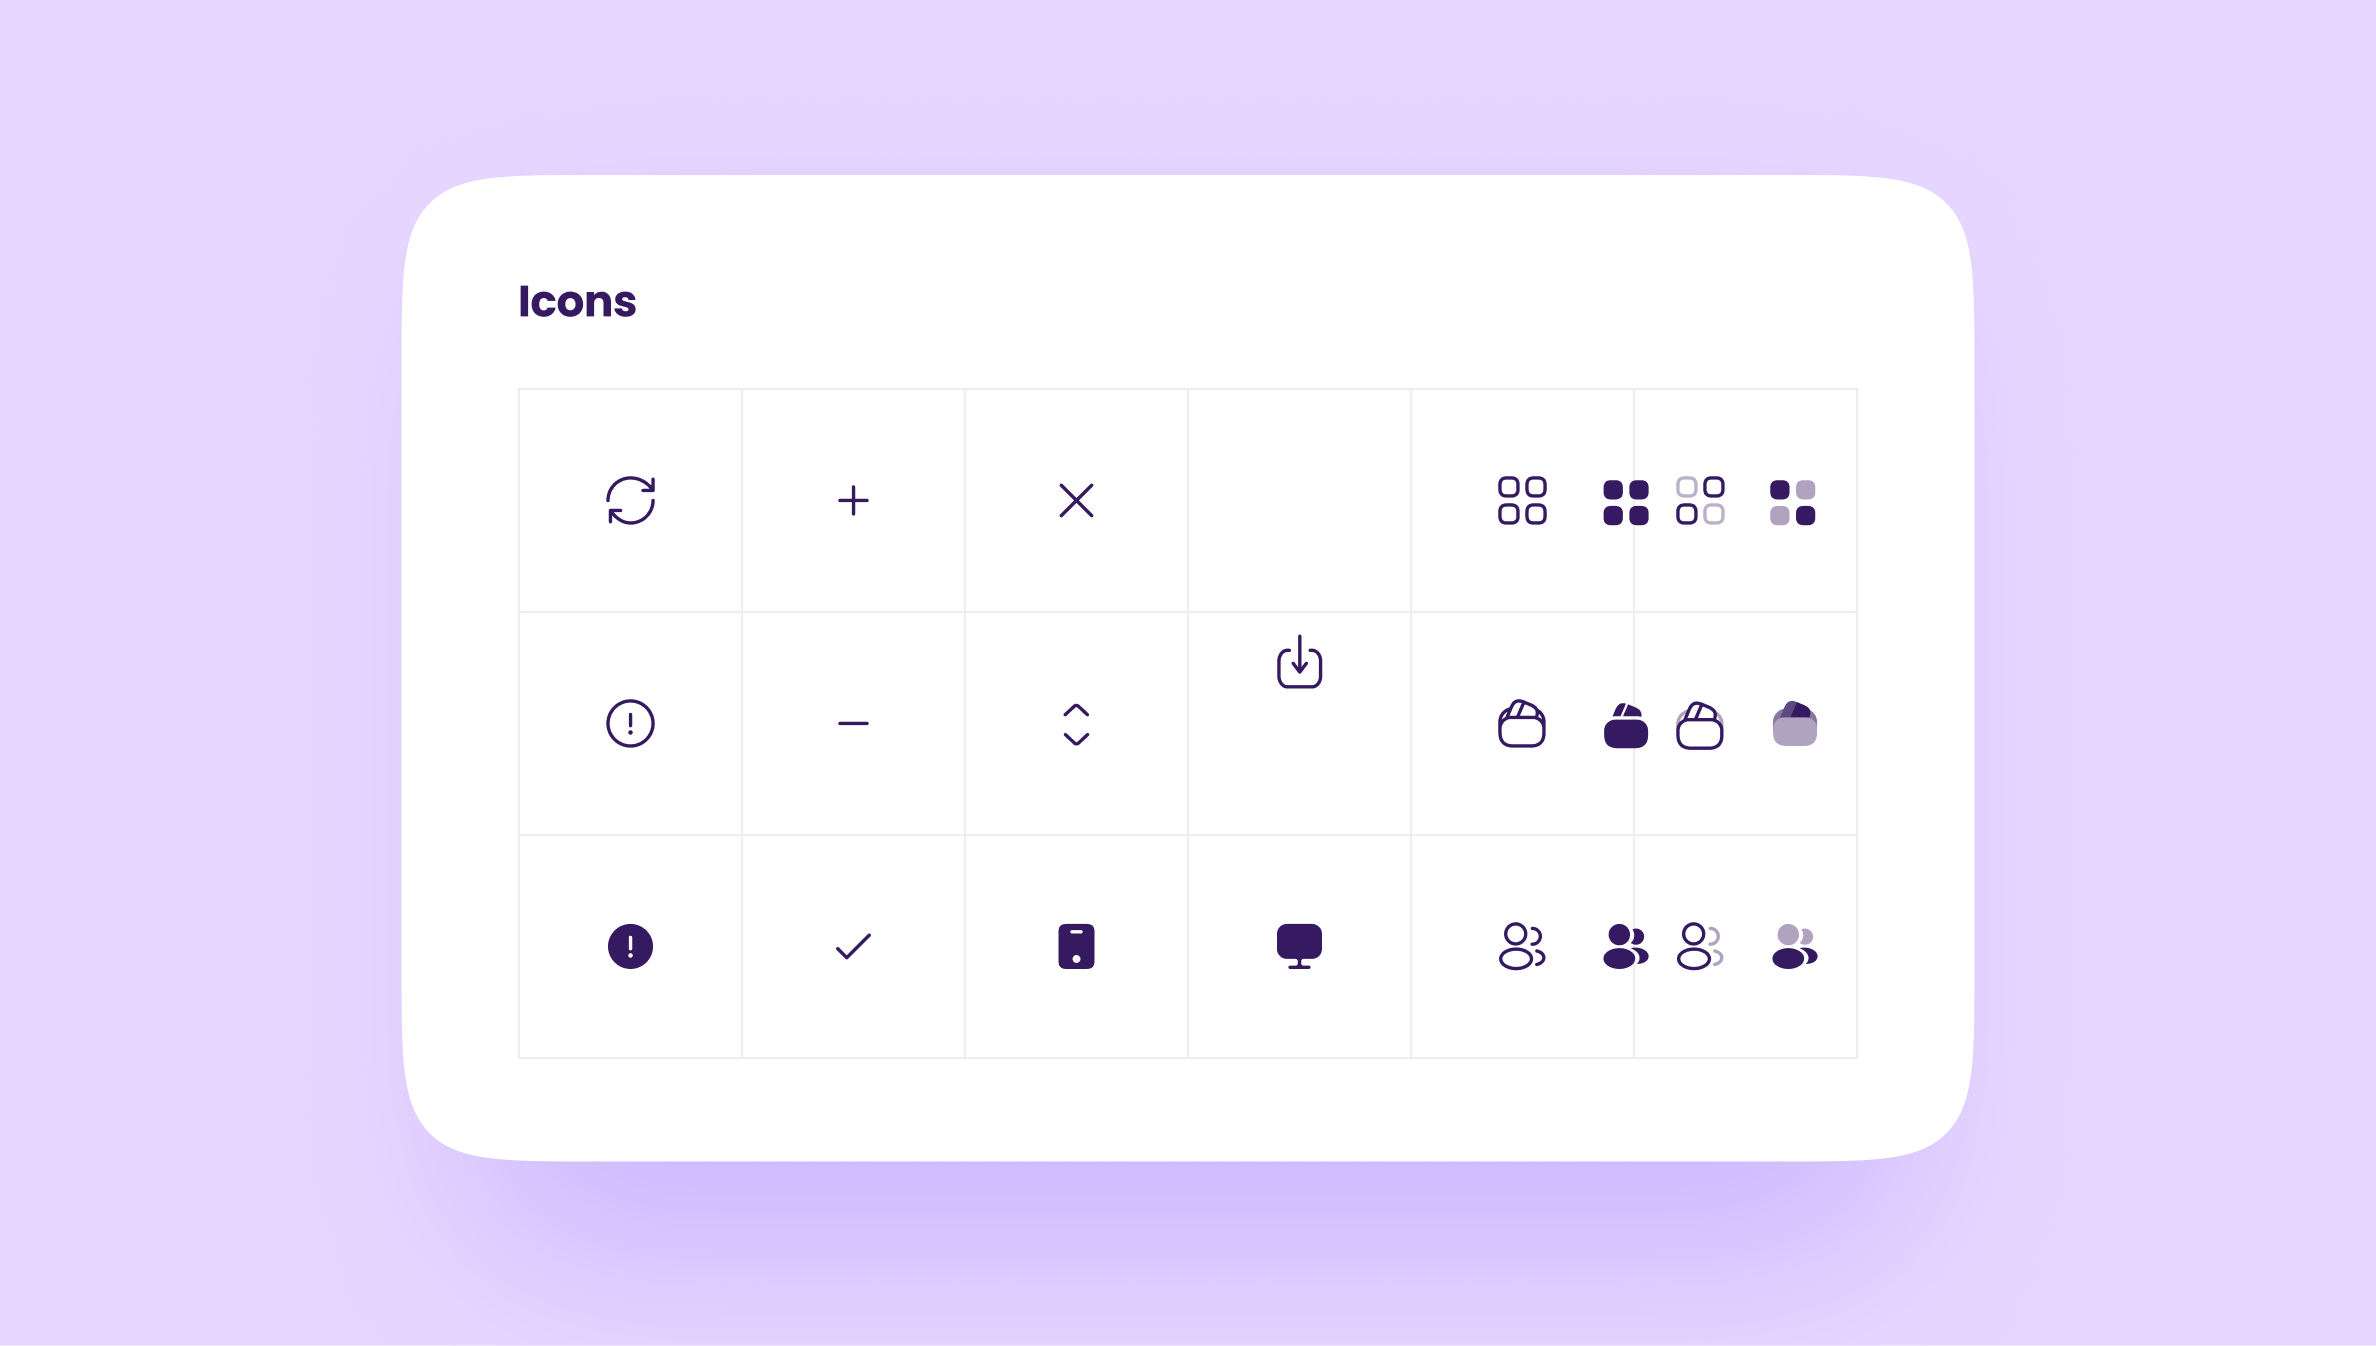 Icons in UI-kit